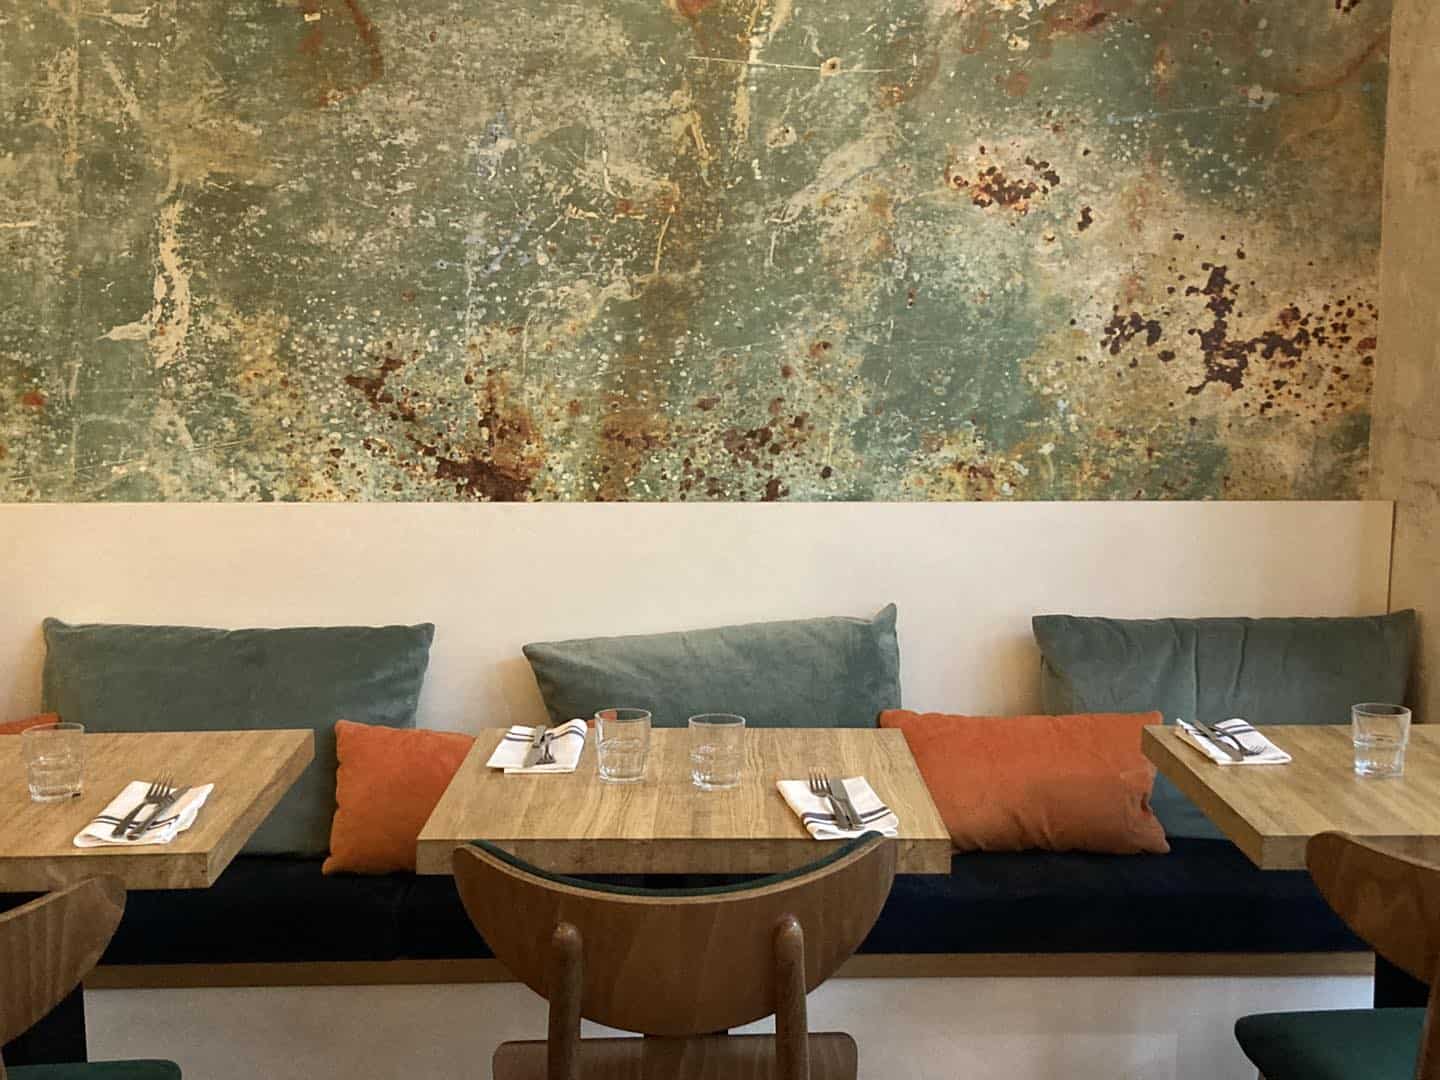 The modern interior of Milagro restaurant in Paris.